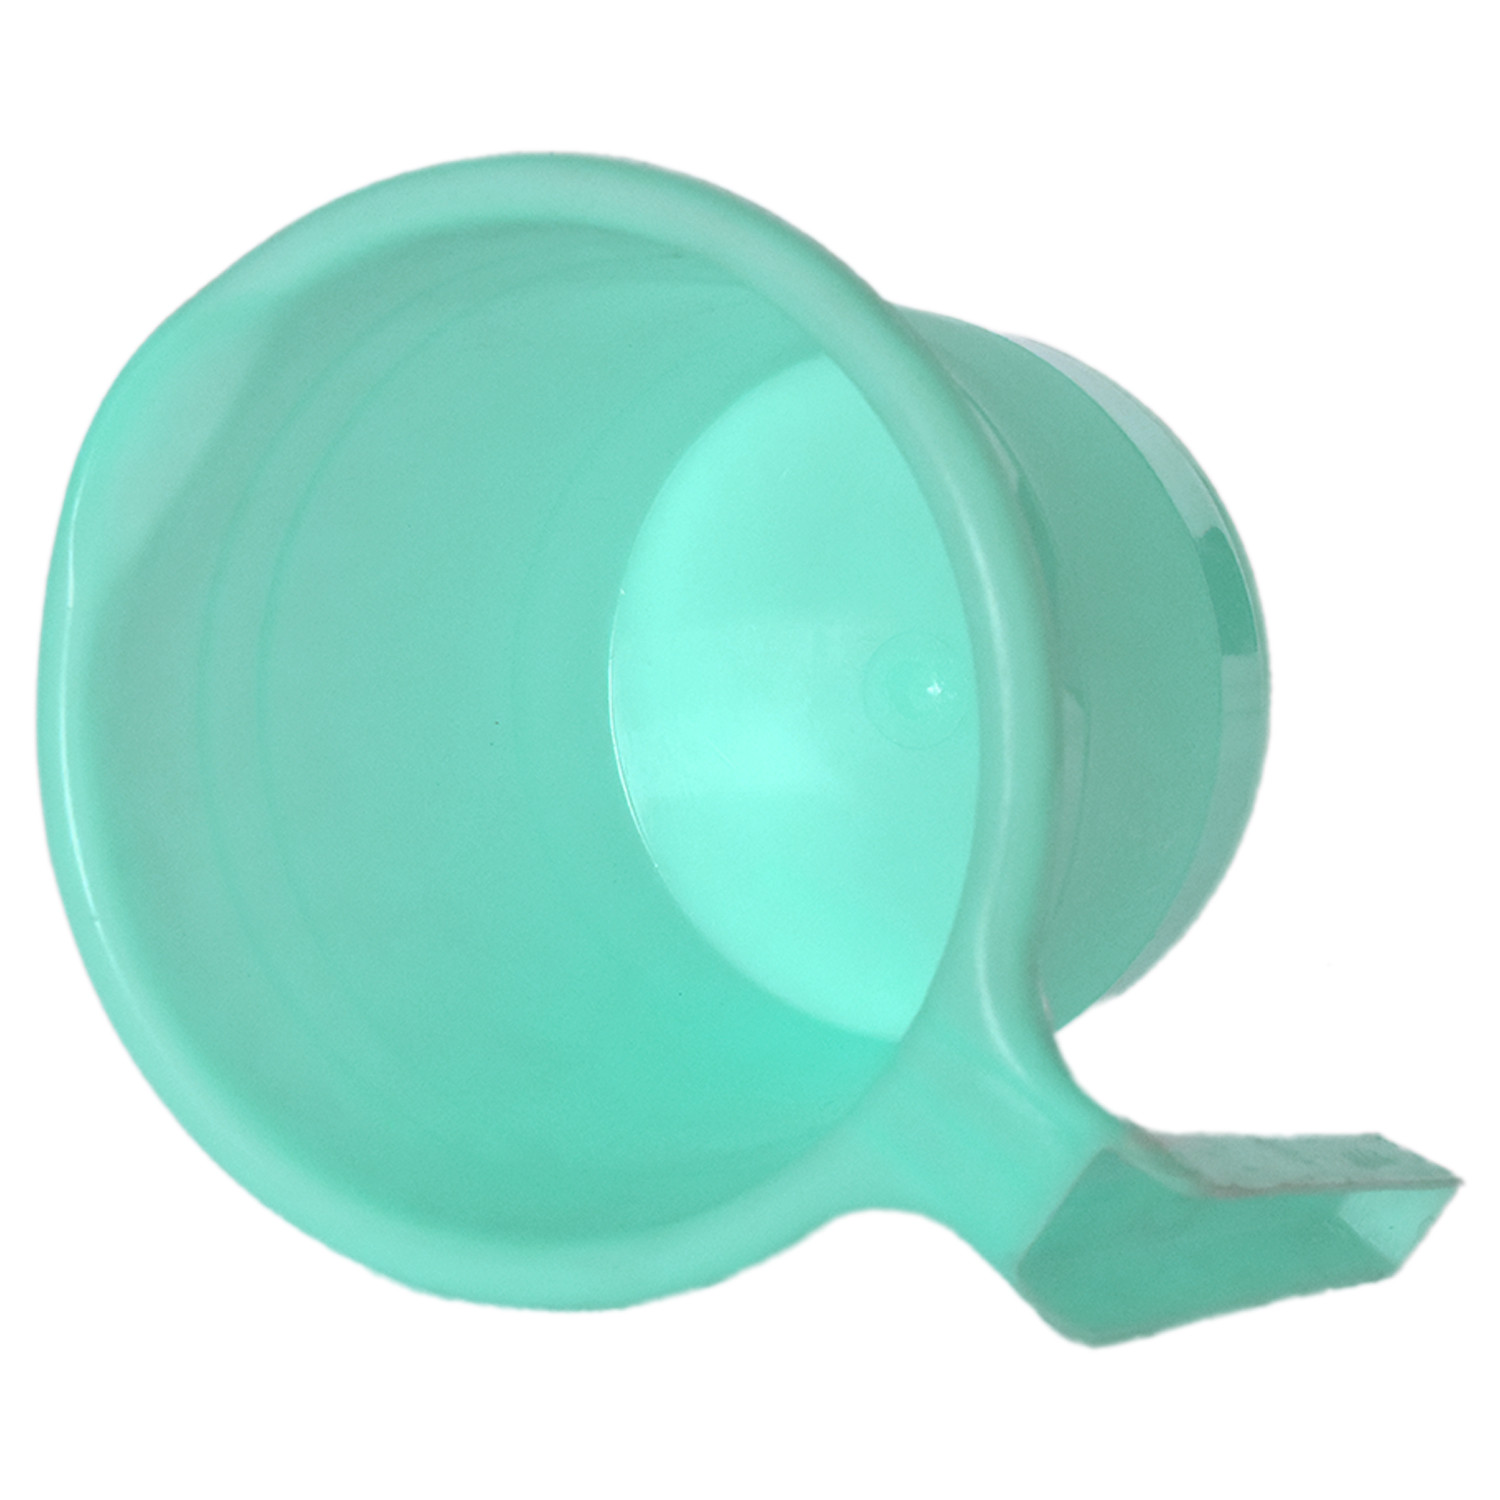 Kuber Industries Plastic Bathroom Mug, 2 Litre-(Green)